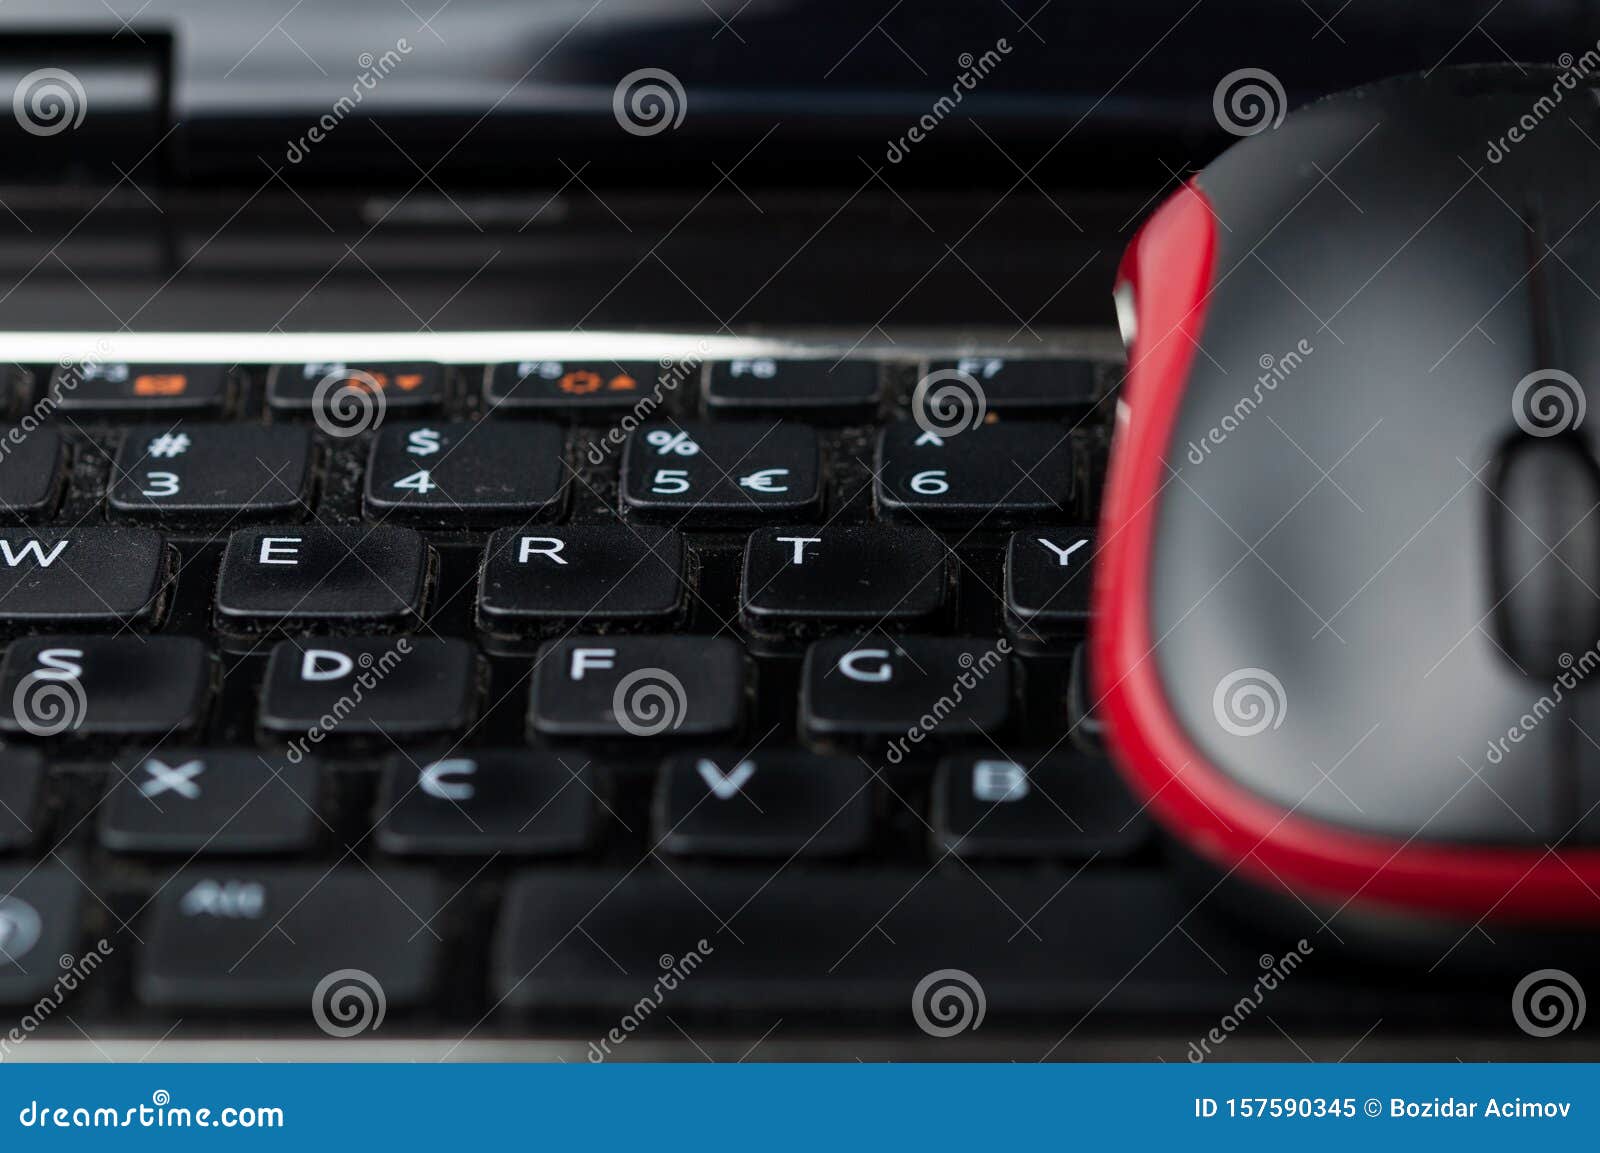 Wireless Mouse On Keyboard Laptop On Desk Stock Image Image Of